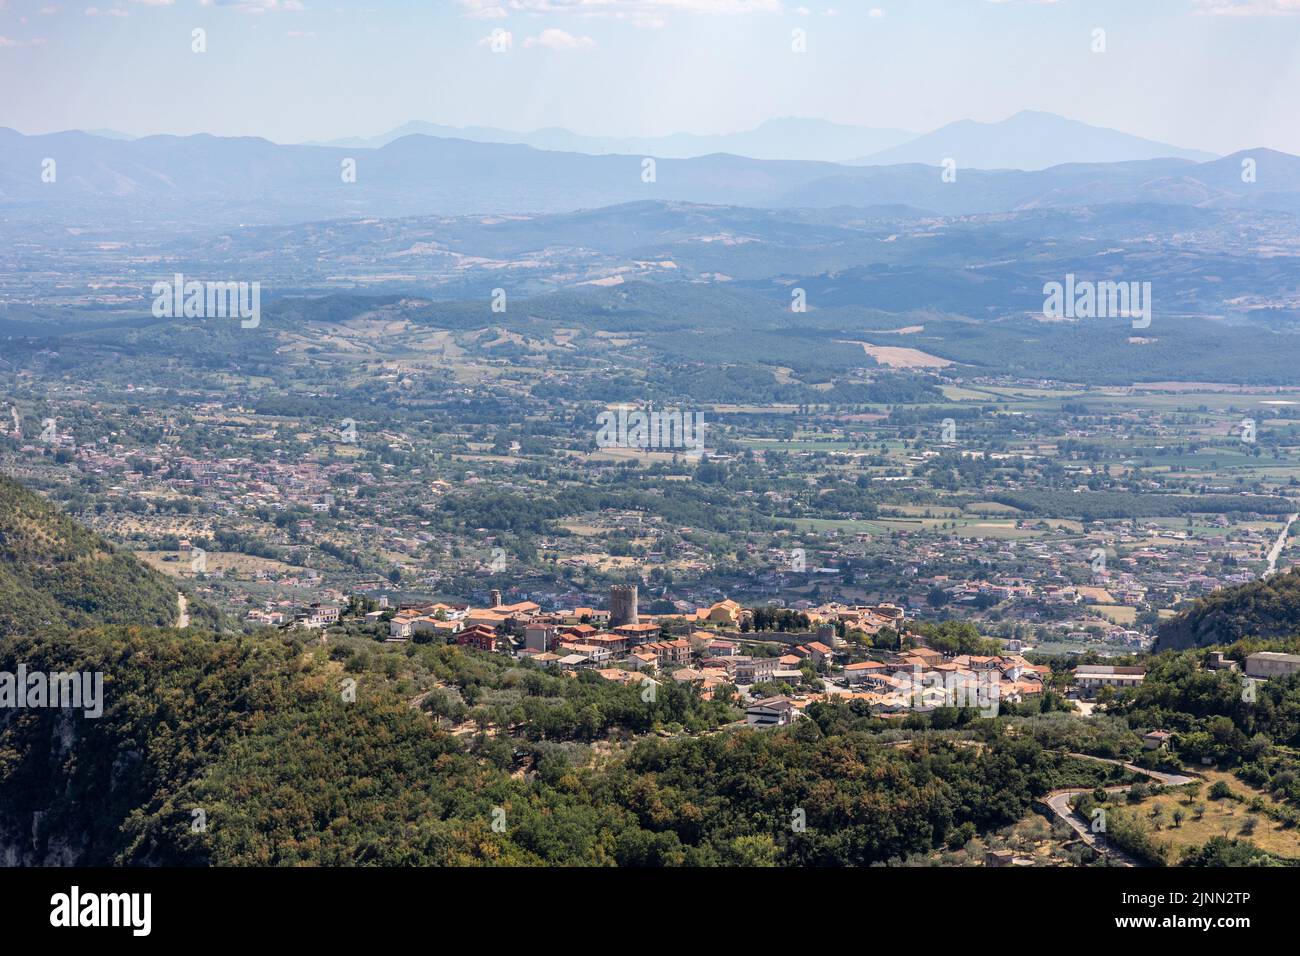 San Marco-campitello  province of Caserta Italy landascape matese, mountain, aerial view. Stock Photo